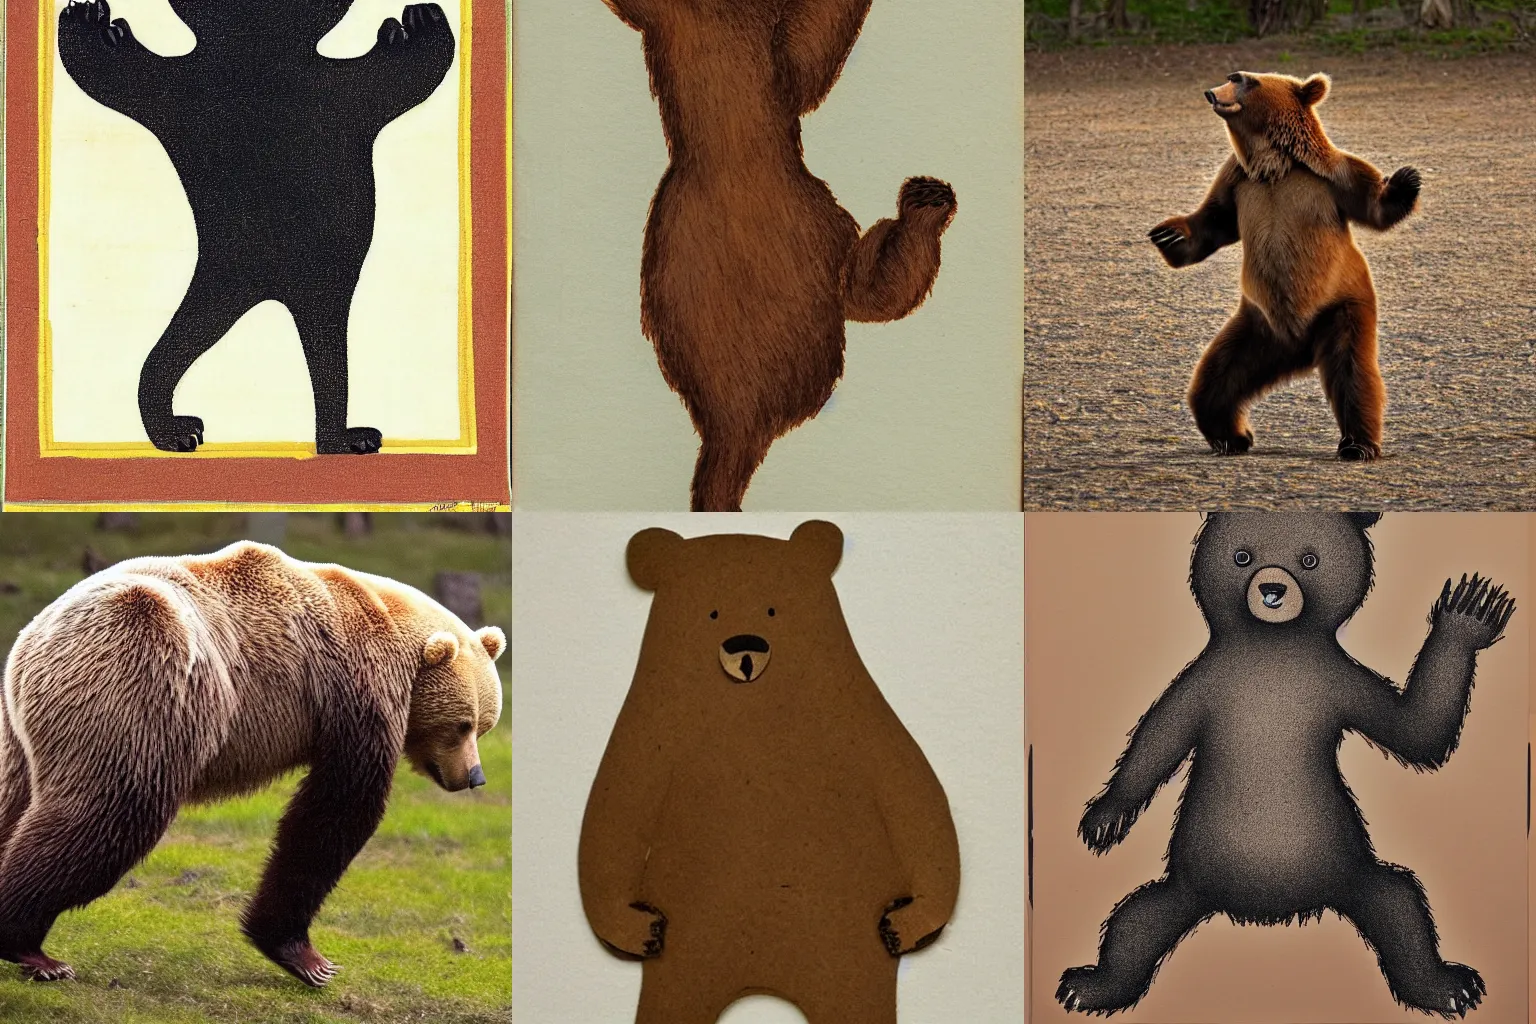 Prompt: a dancing bear.